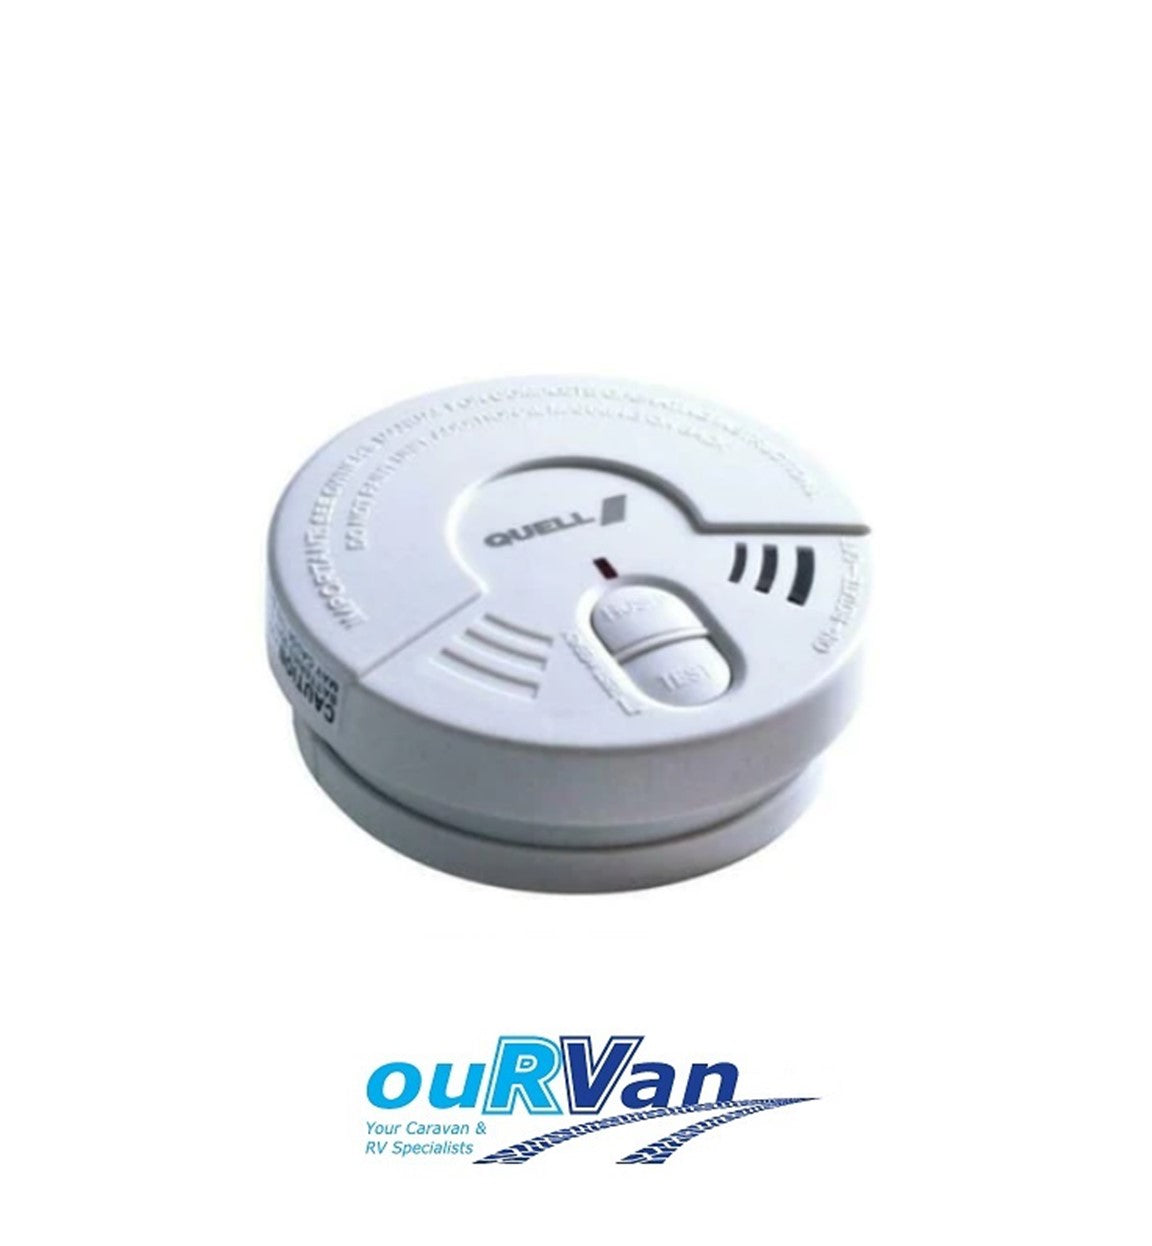 Quell 13599 Ionisation Hush / Test Living Area Smoke Alarm Caravan RV